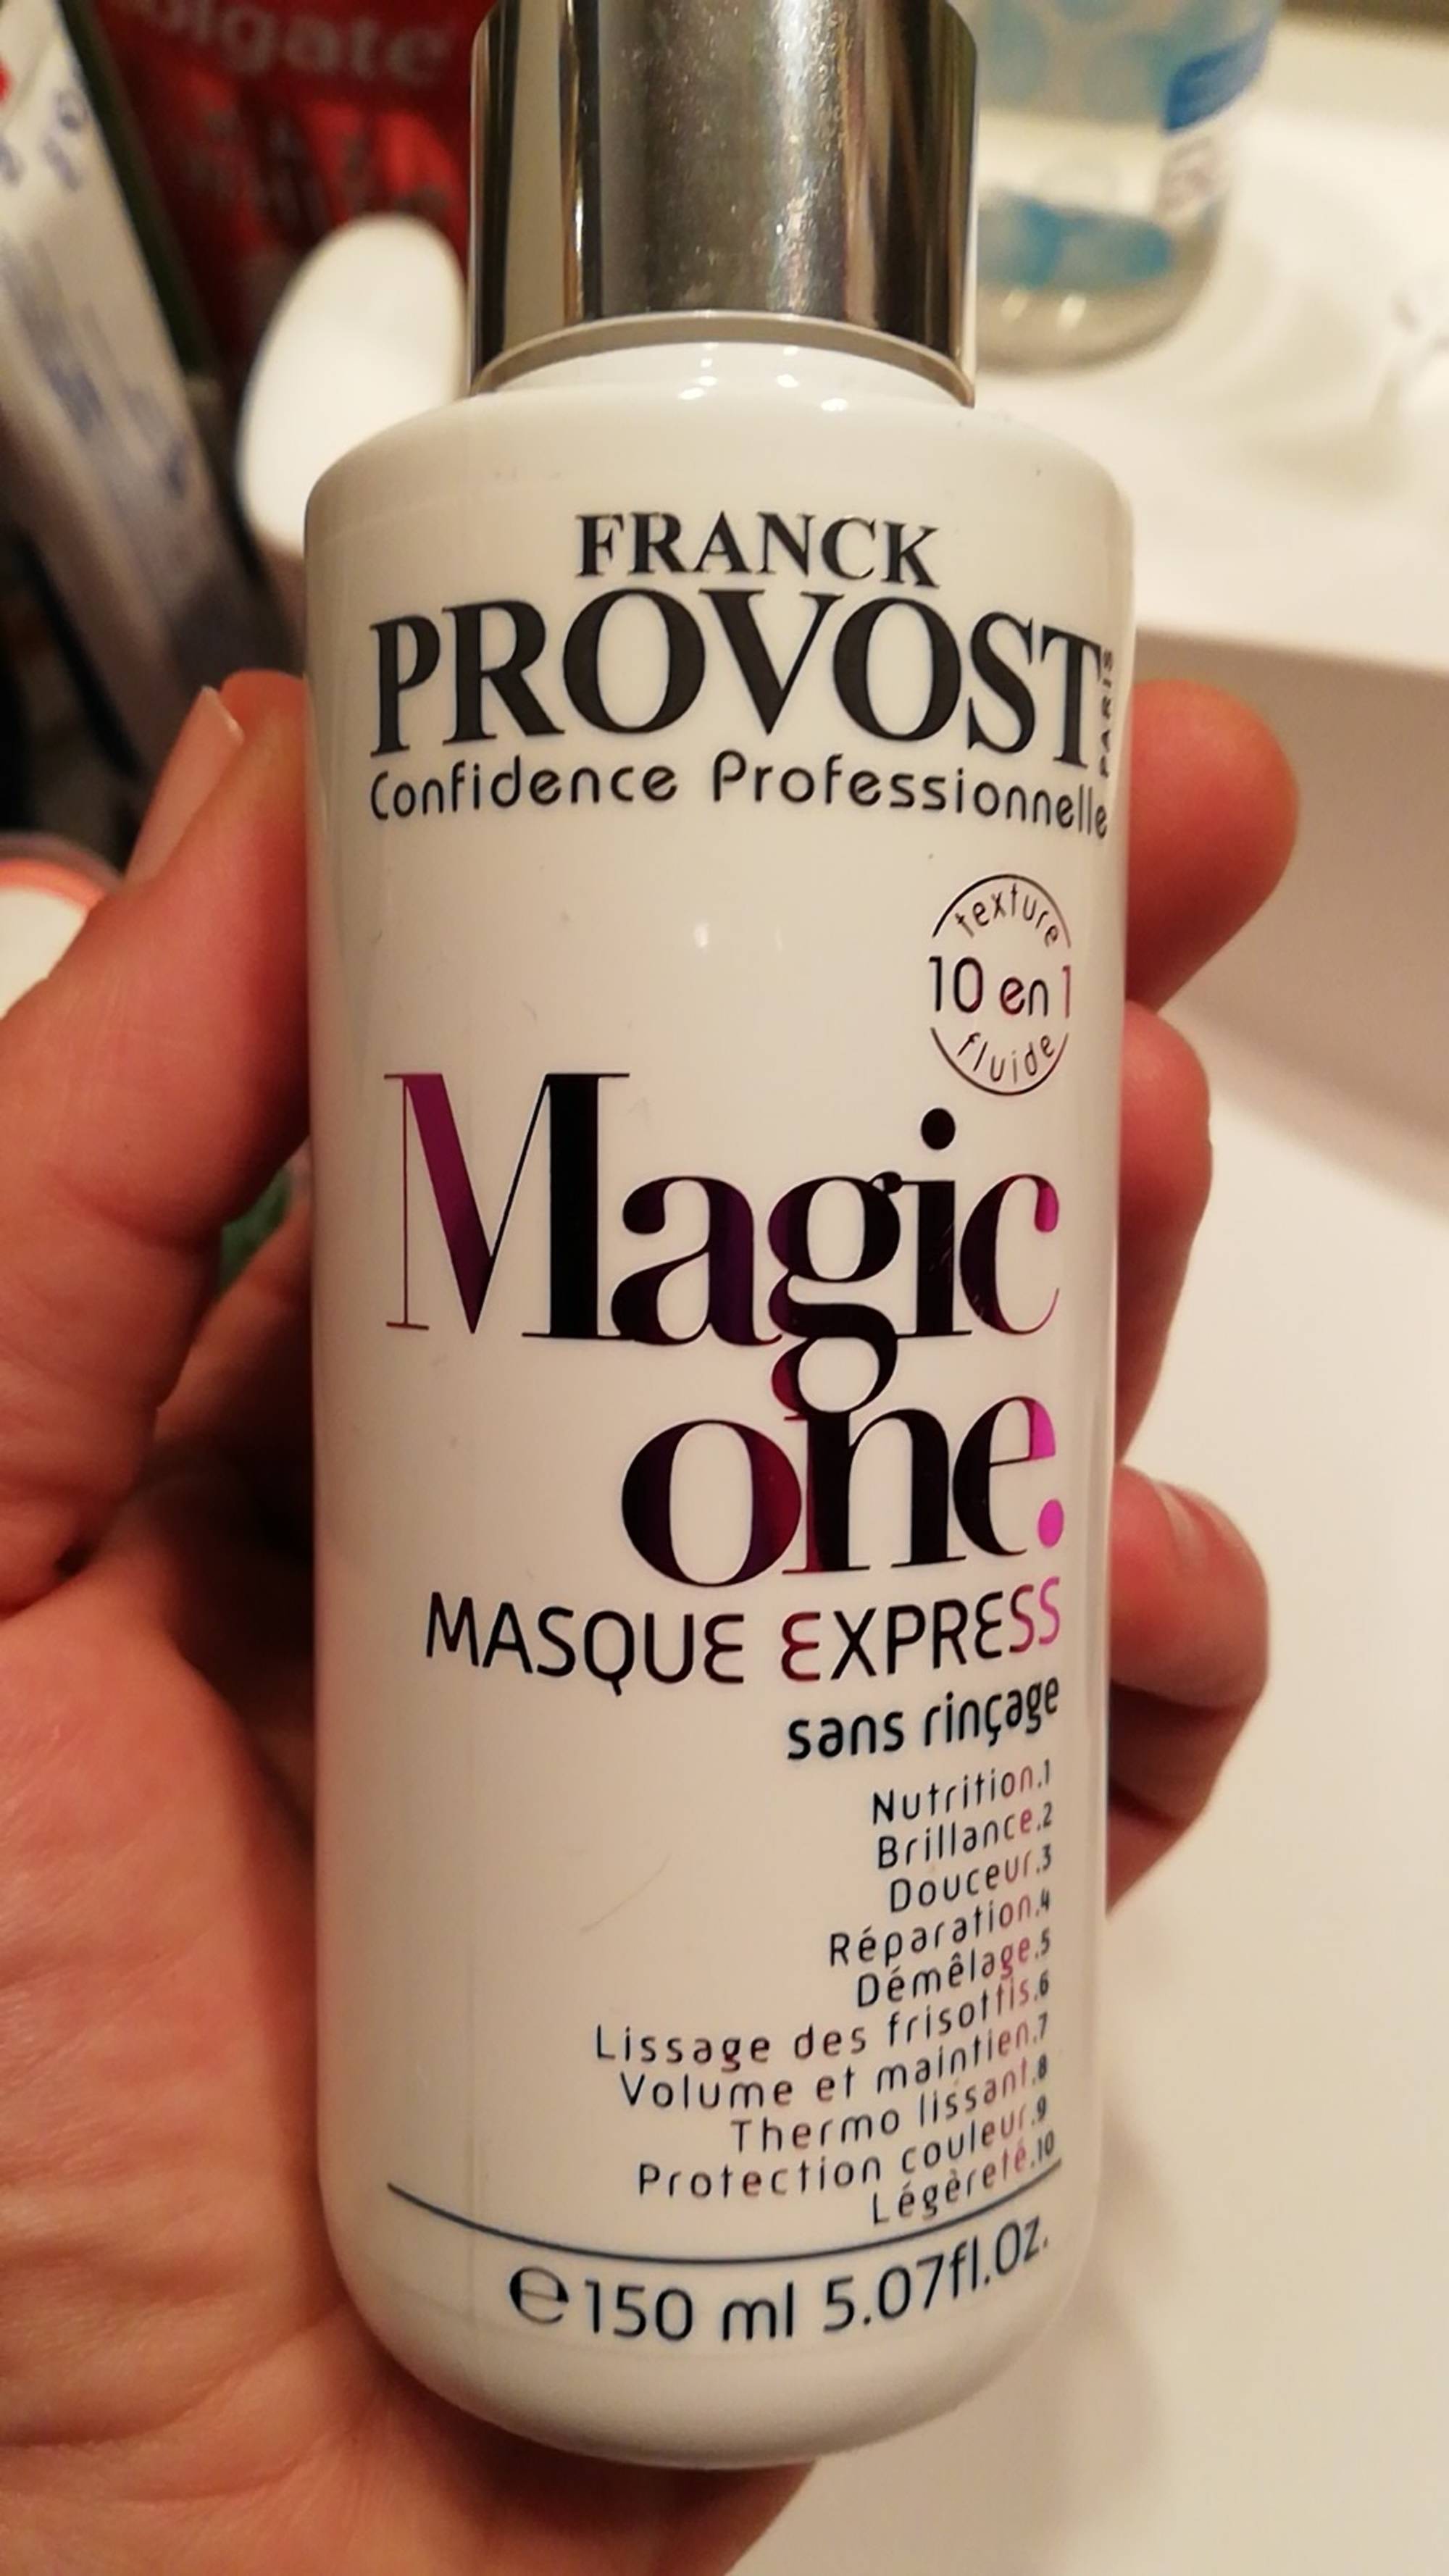 FRANCK PROVOST - Confidence professionnelle - Masque express